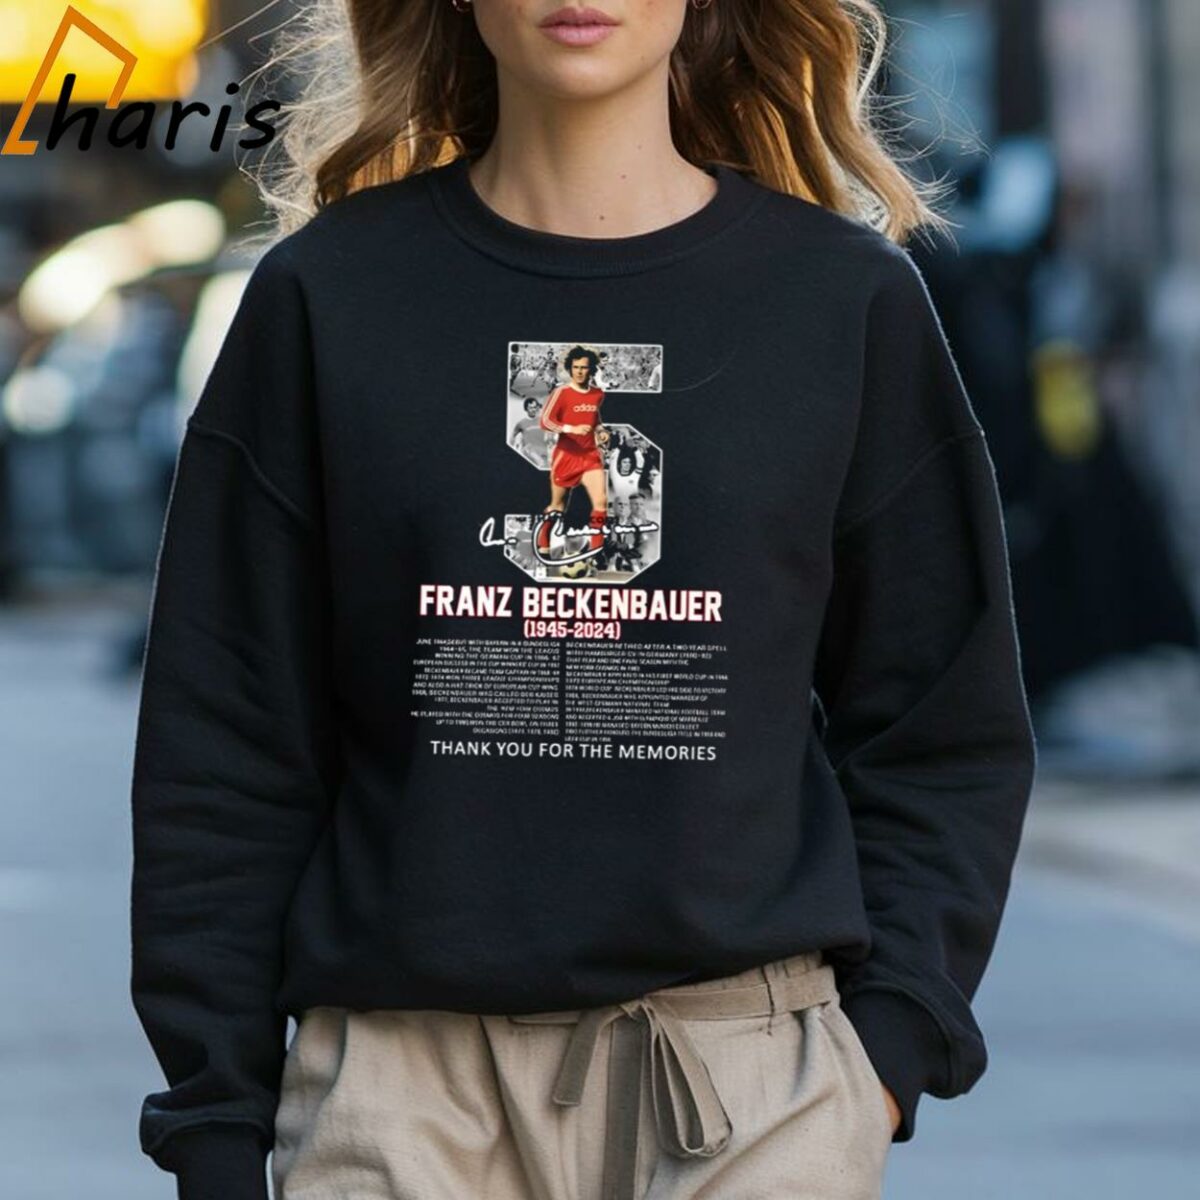 Franz Beckenbauer 1945 2024 Thank You For The Memories Signature T shirt 3 Sweatshirt